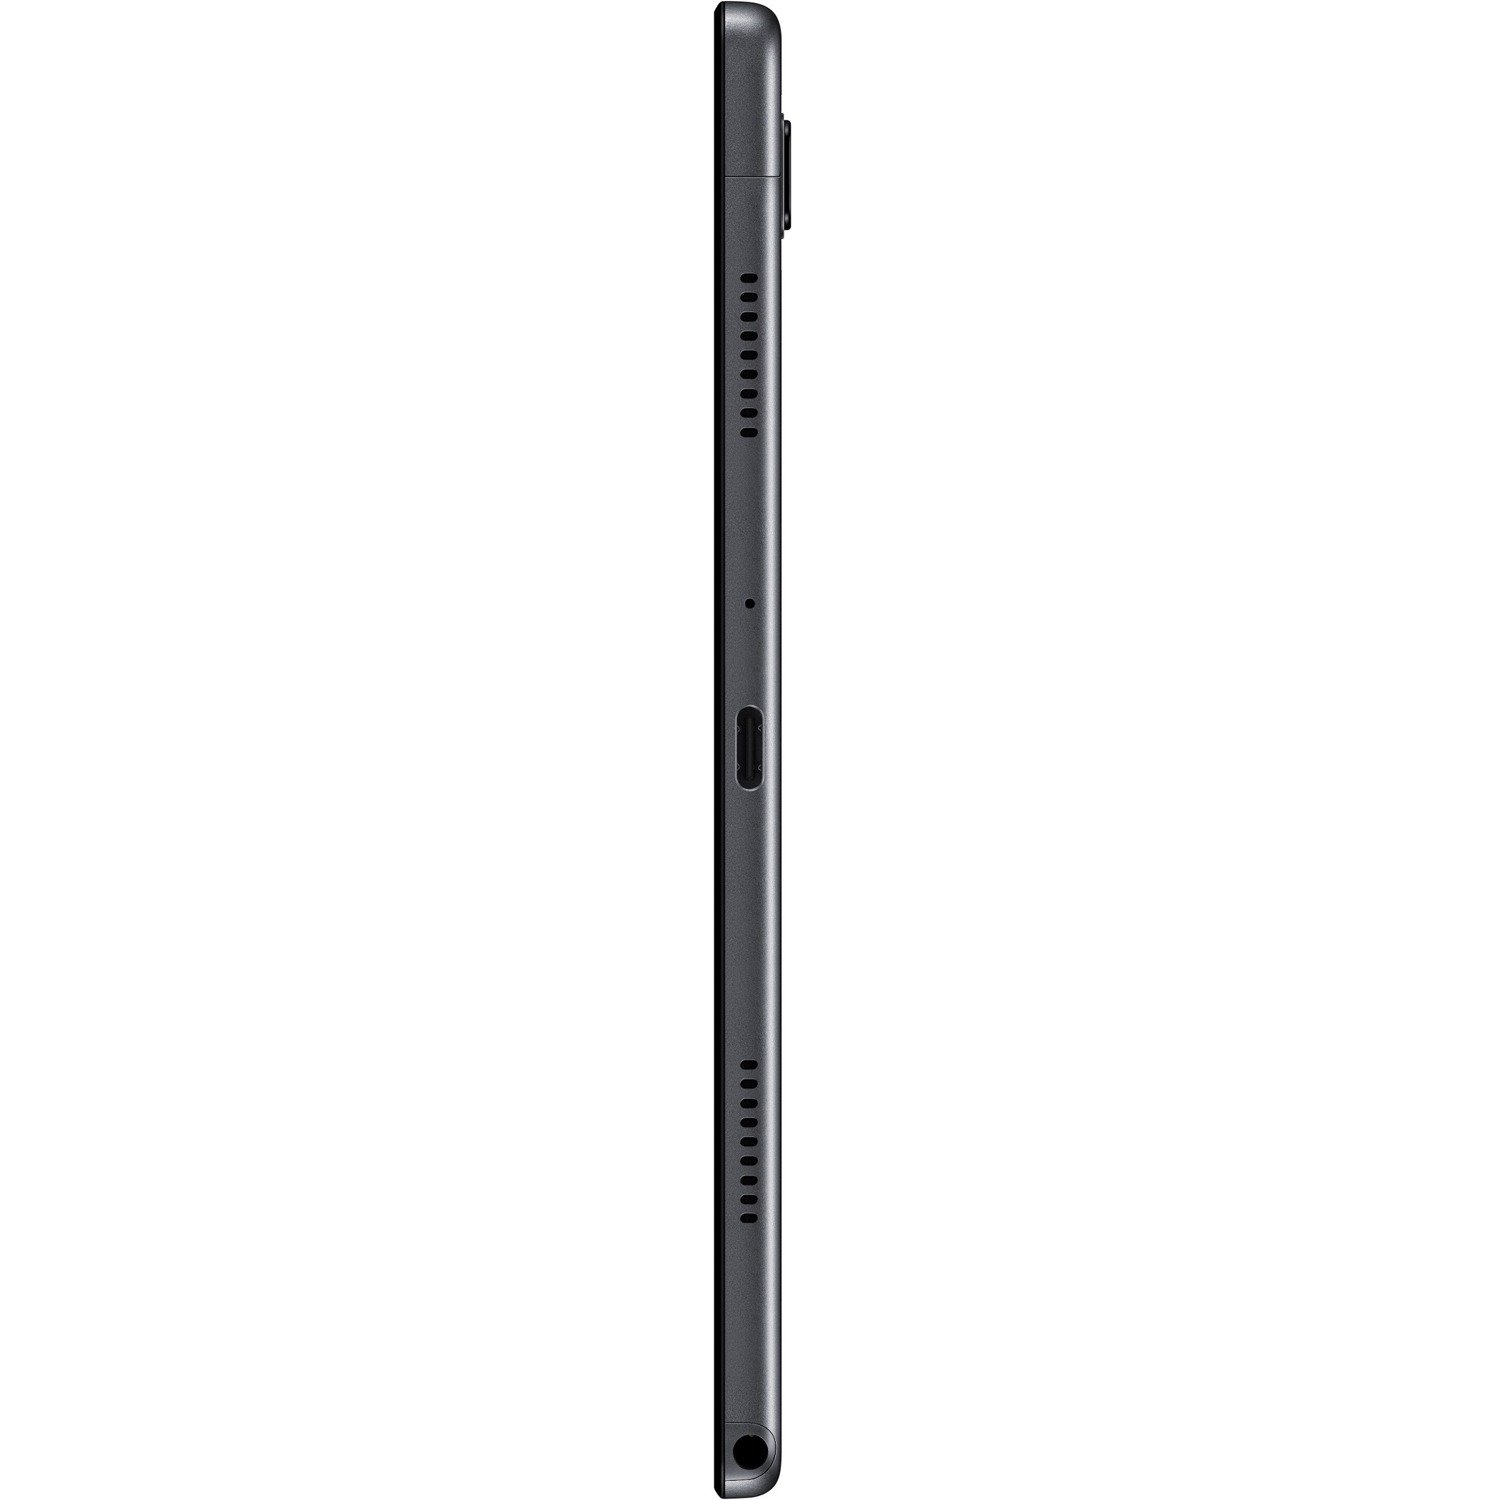 Samsung Galaxy Tab A7 Tablet - 10.4" WUXGA+ - Qualcomm SM6115 Snapdragon 662 Octa-core - 3 GB - 32 GB Storage - Android 10 - Dark Gray